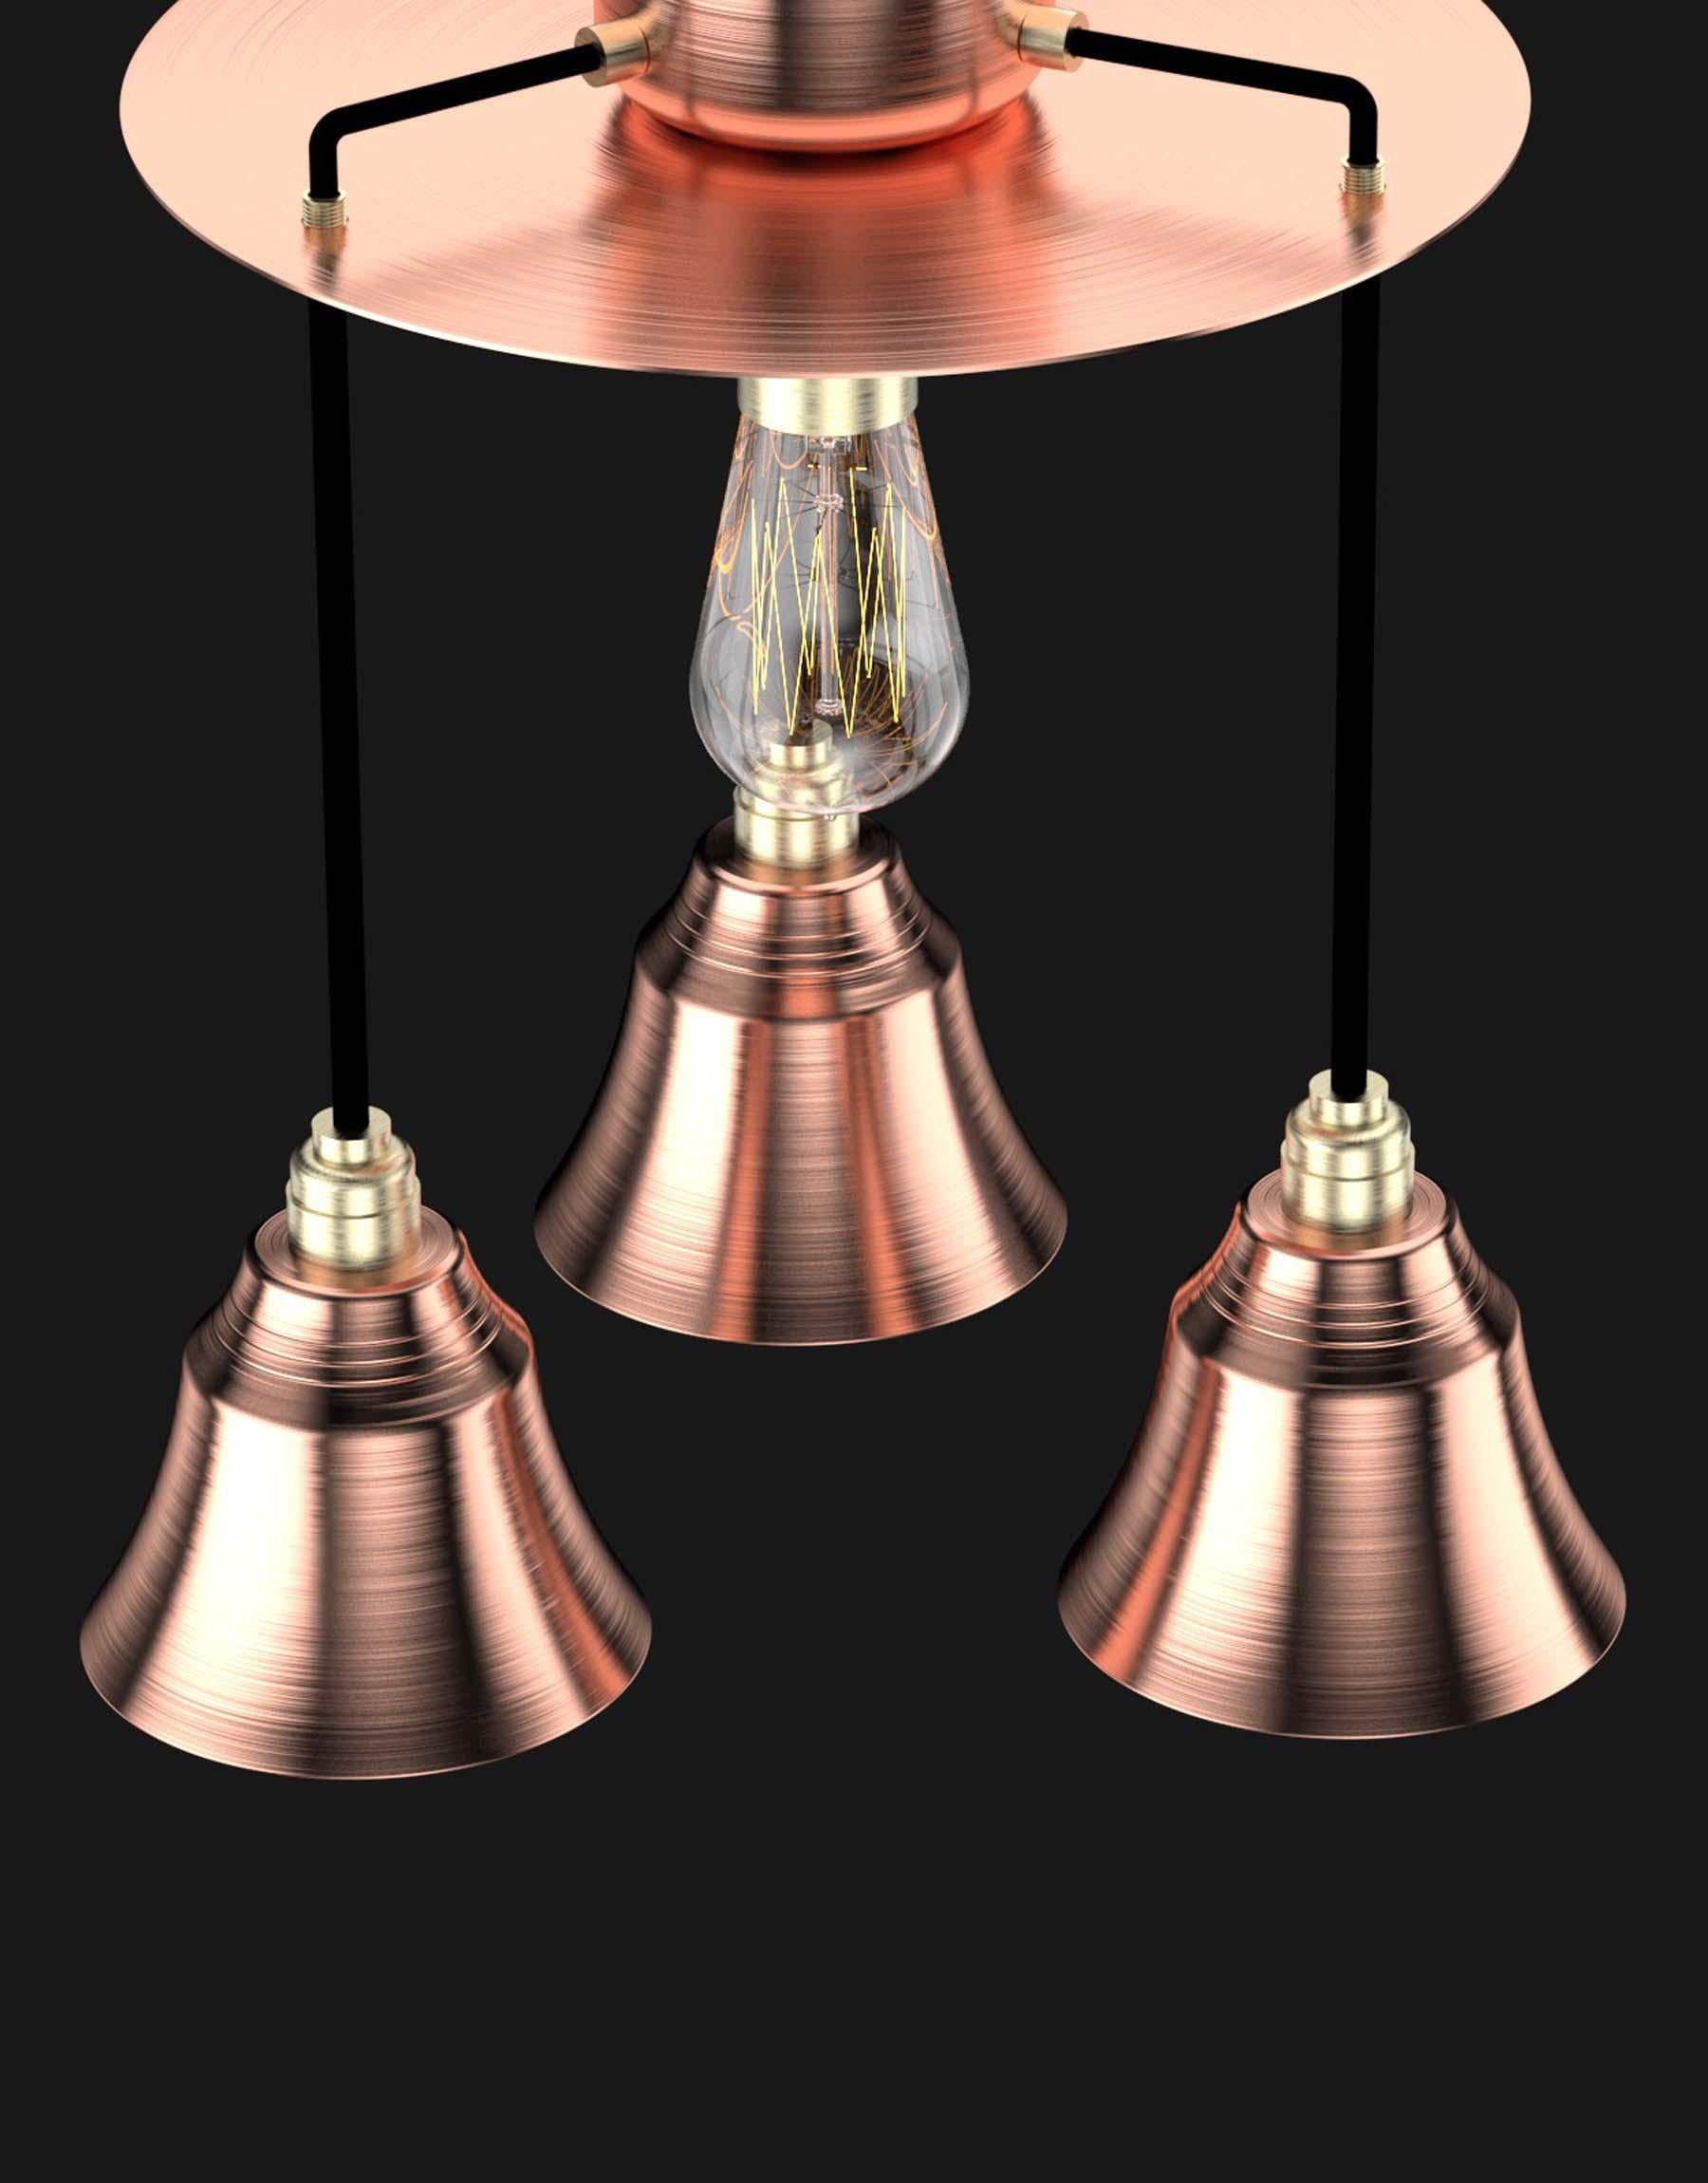 Brushed Edimate Genuine Copper Ceiling Light, Handmade in France Version 2 For Sale